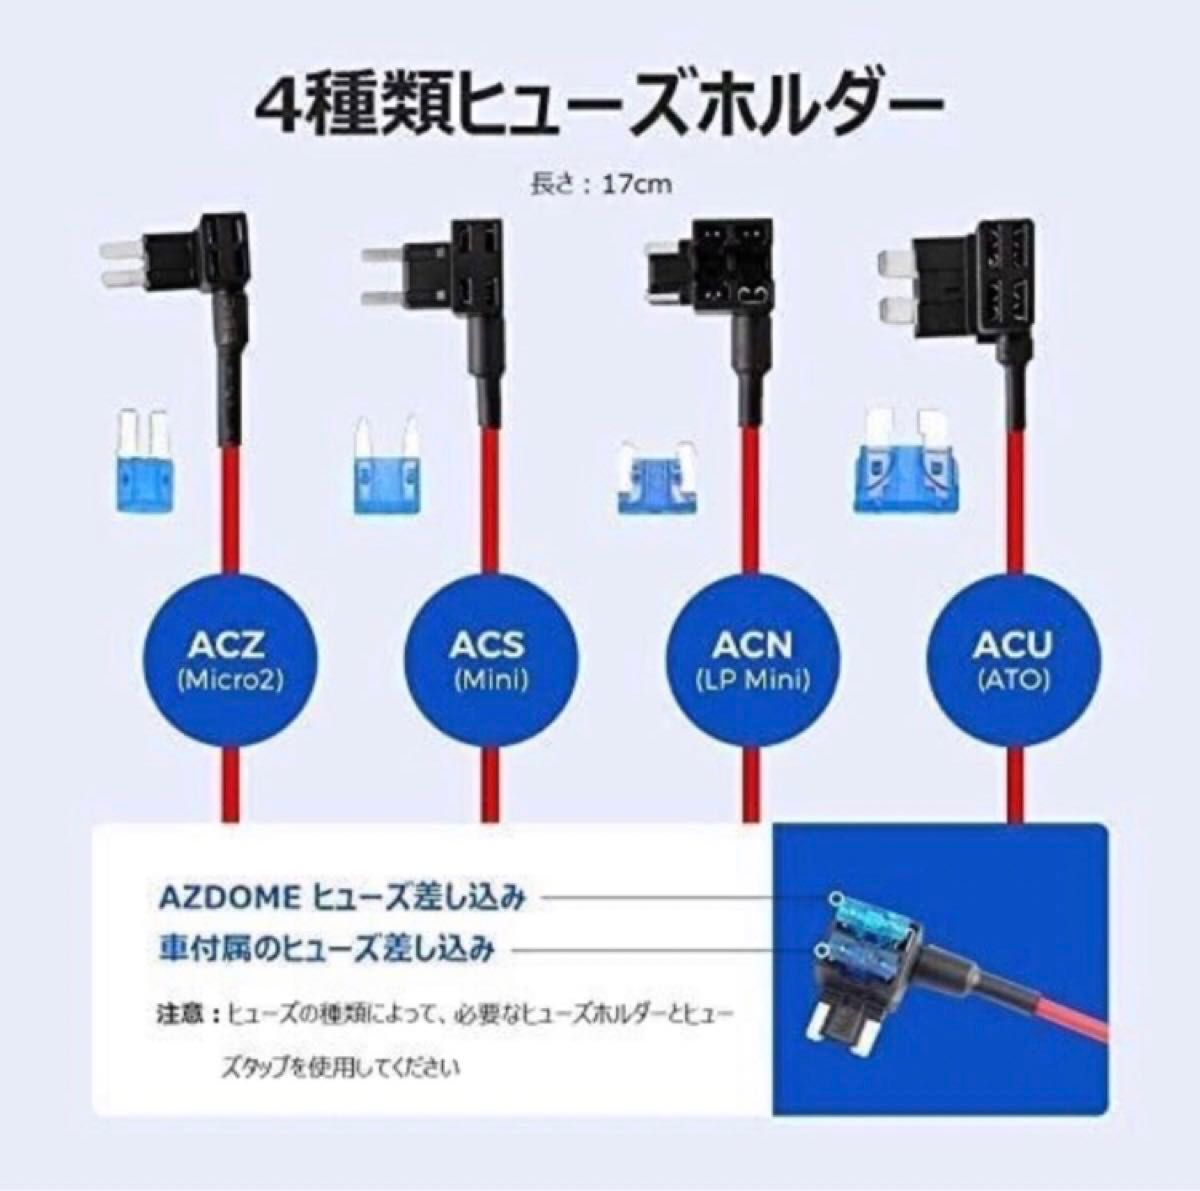 AZDOMEドライブレコーダー用 降圧ケーブル Mini USB電源直結コード 24時間 駐車監視に適用